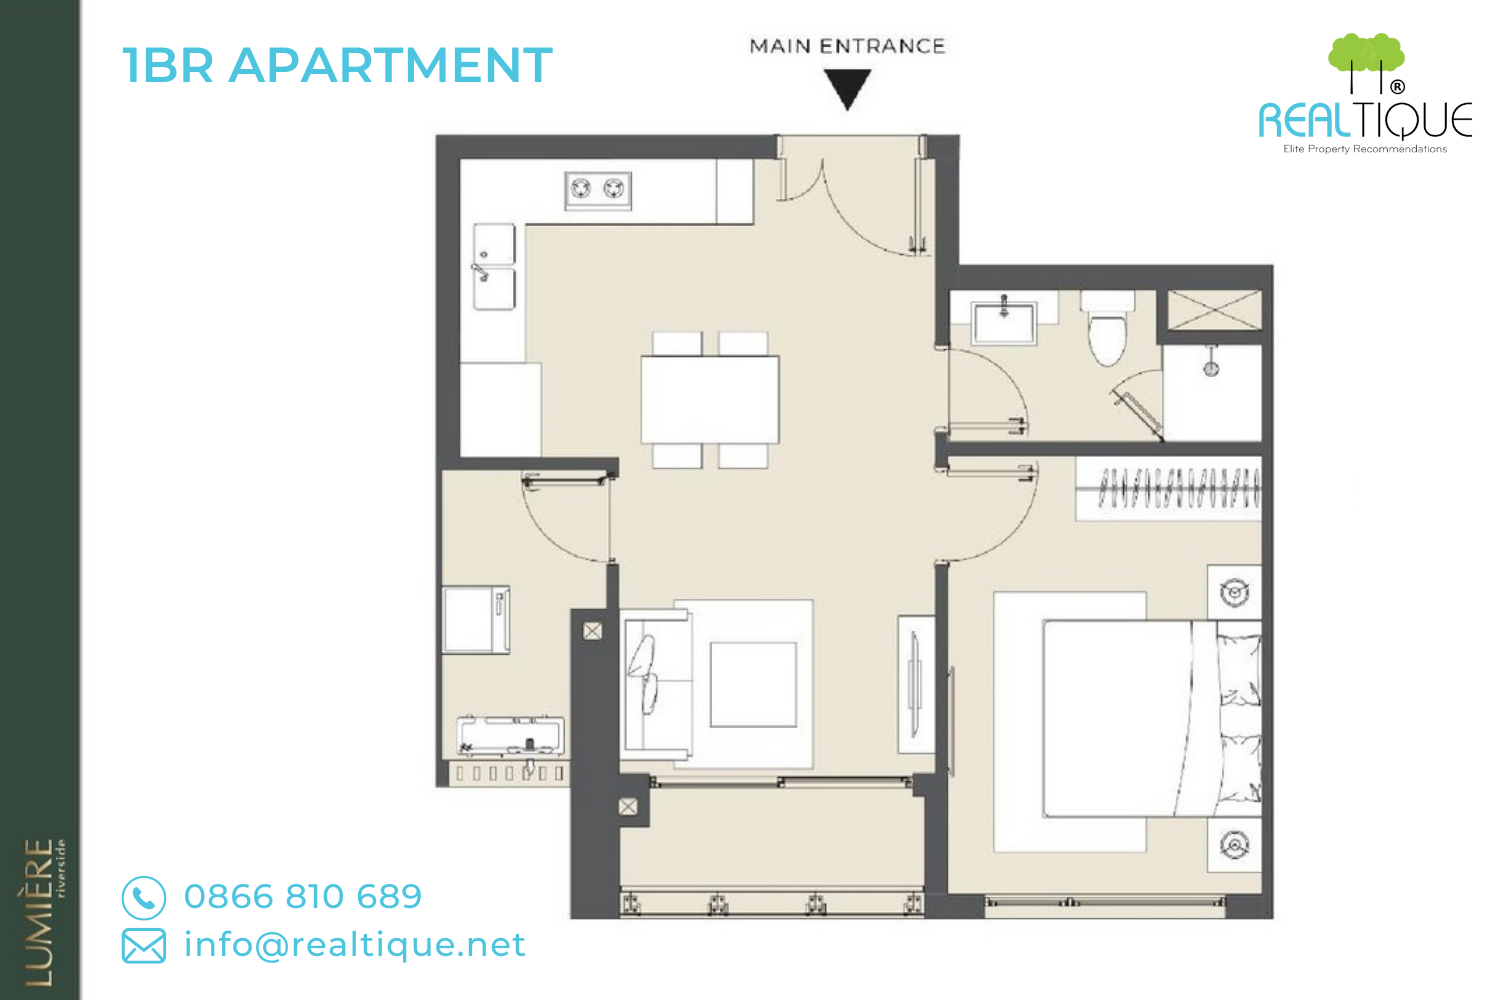 Floor plan of 1-bedroom apartment in LUMIÈRE riverside project District 2